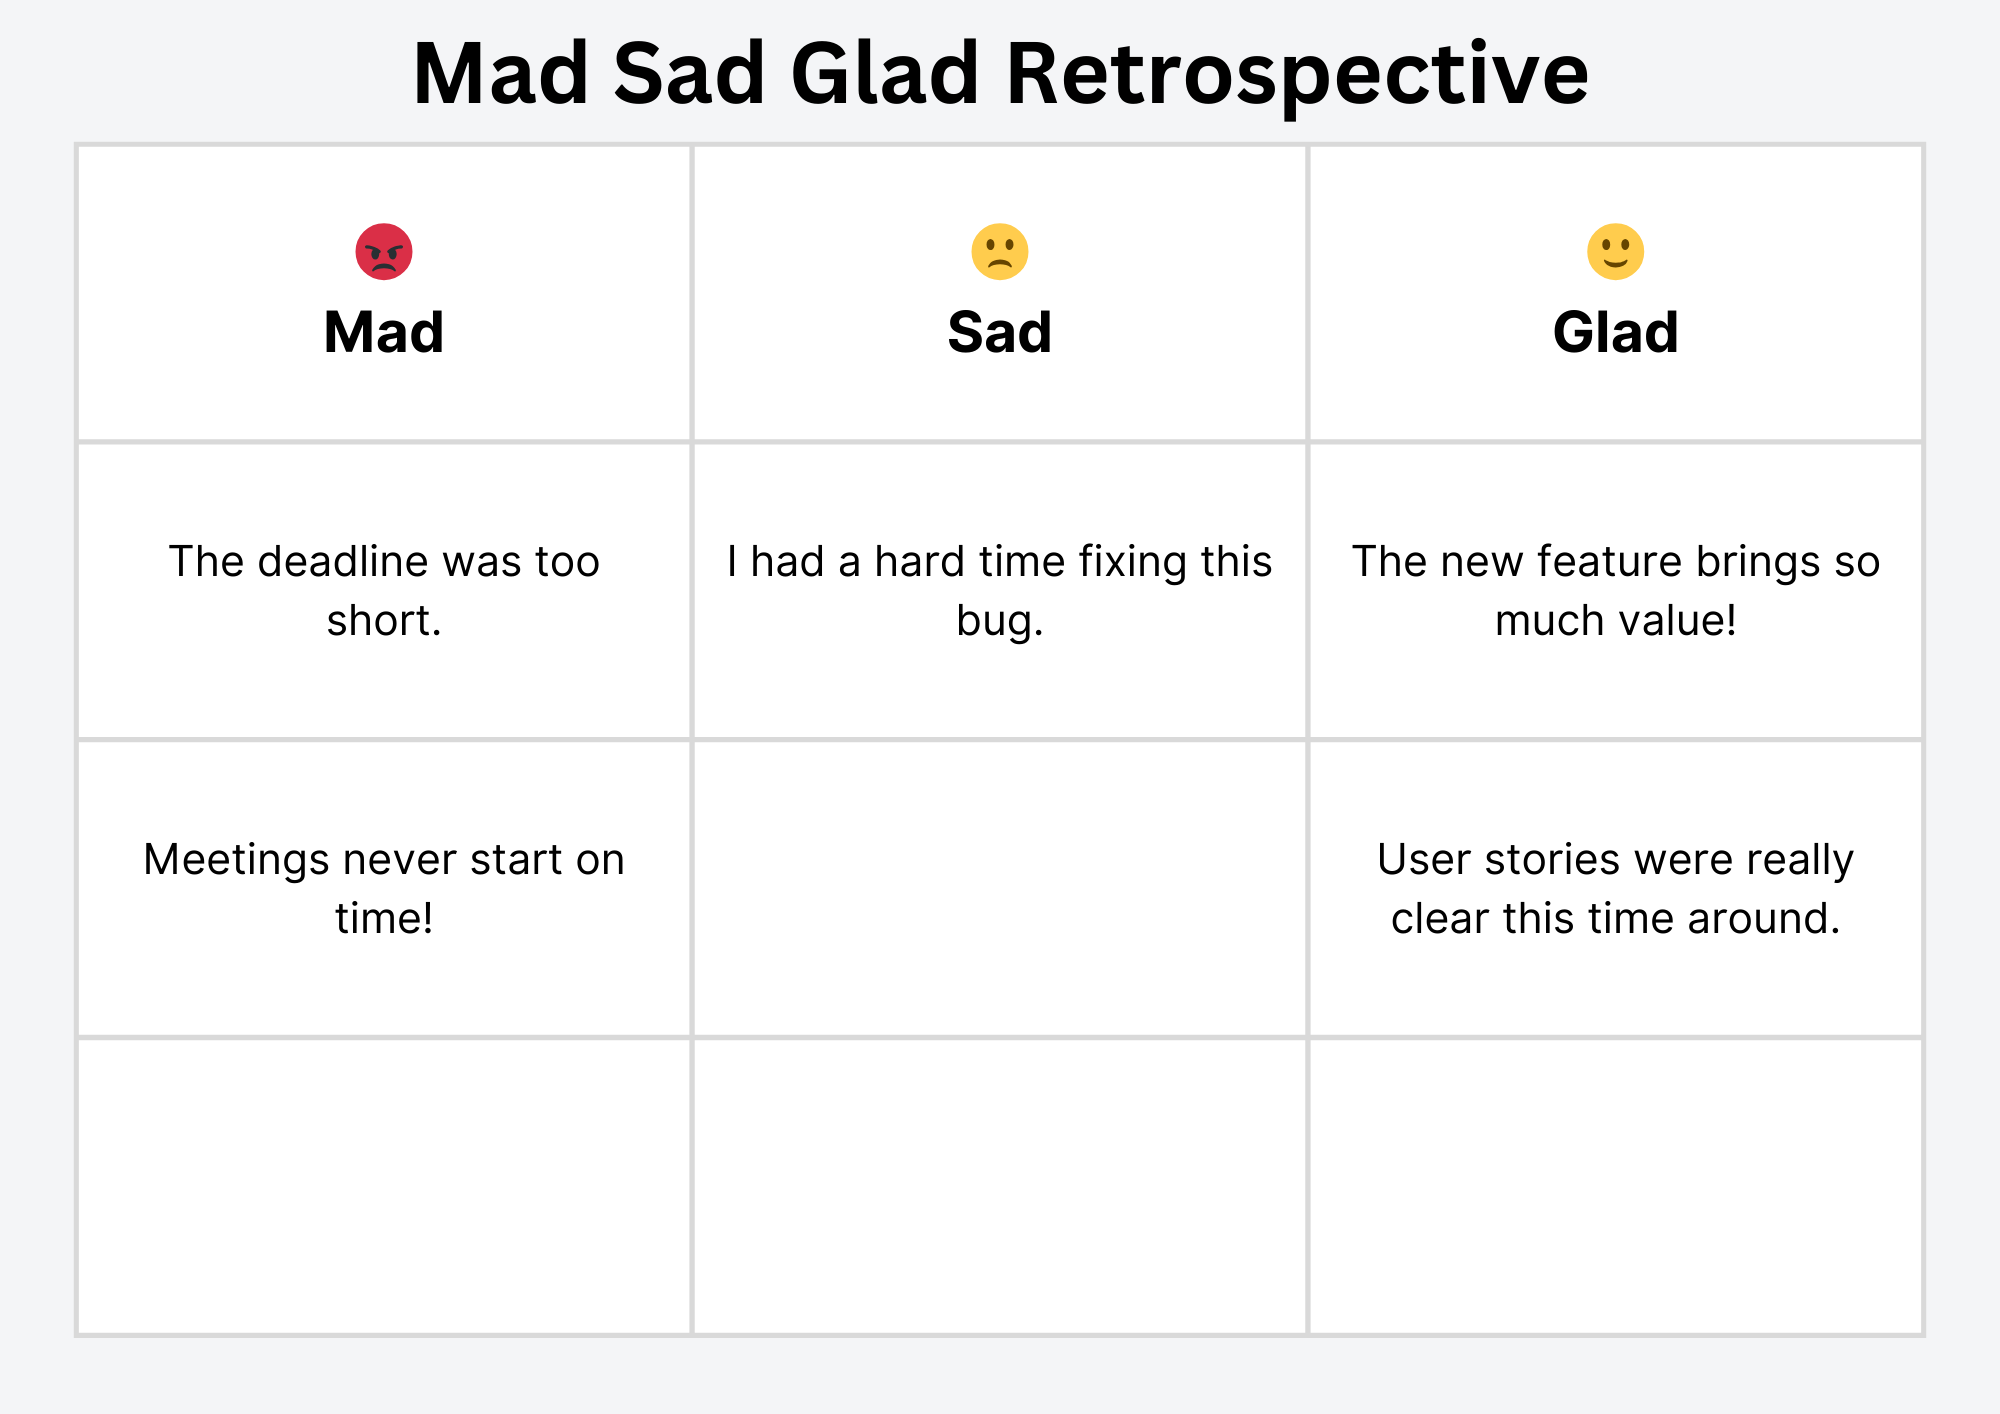 Mad-Sad-Glad retrospective